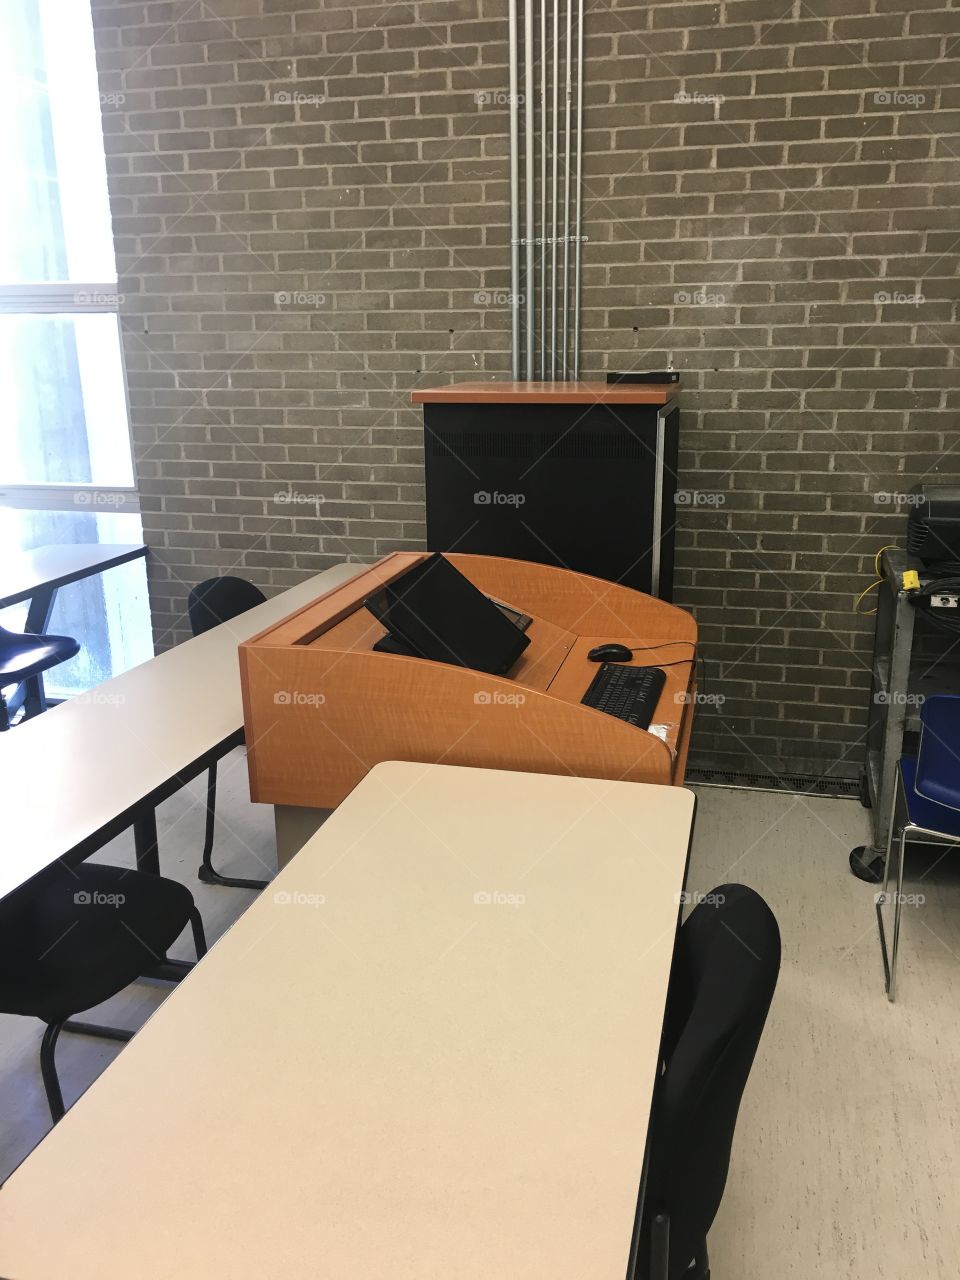 Teacher's station in an empty classroom